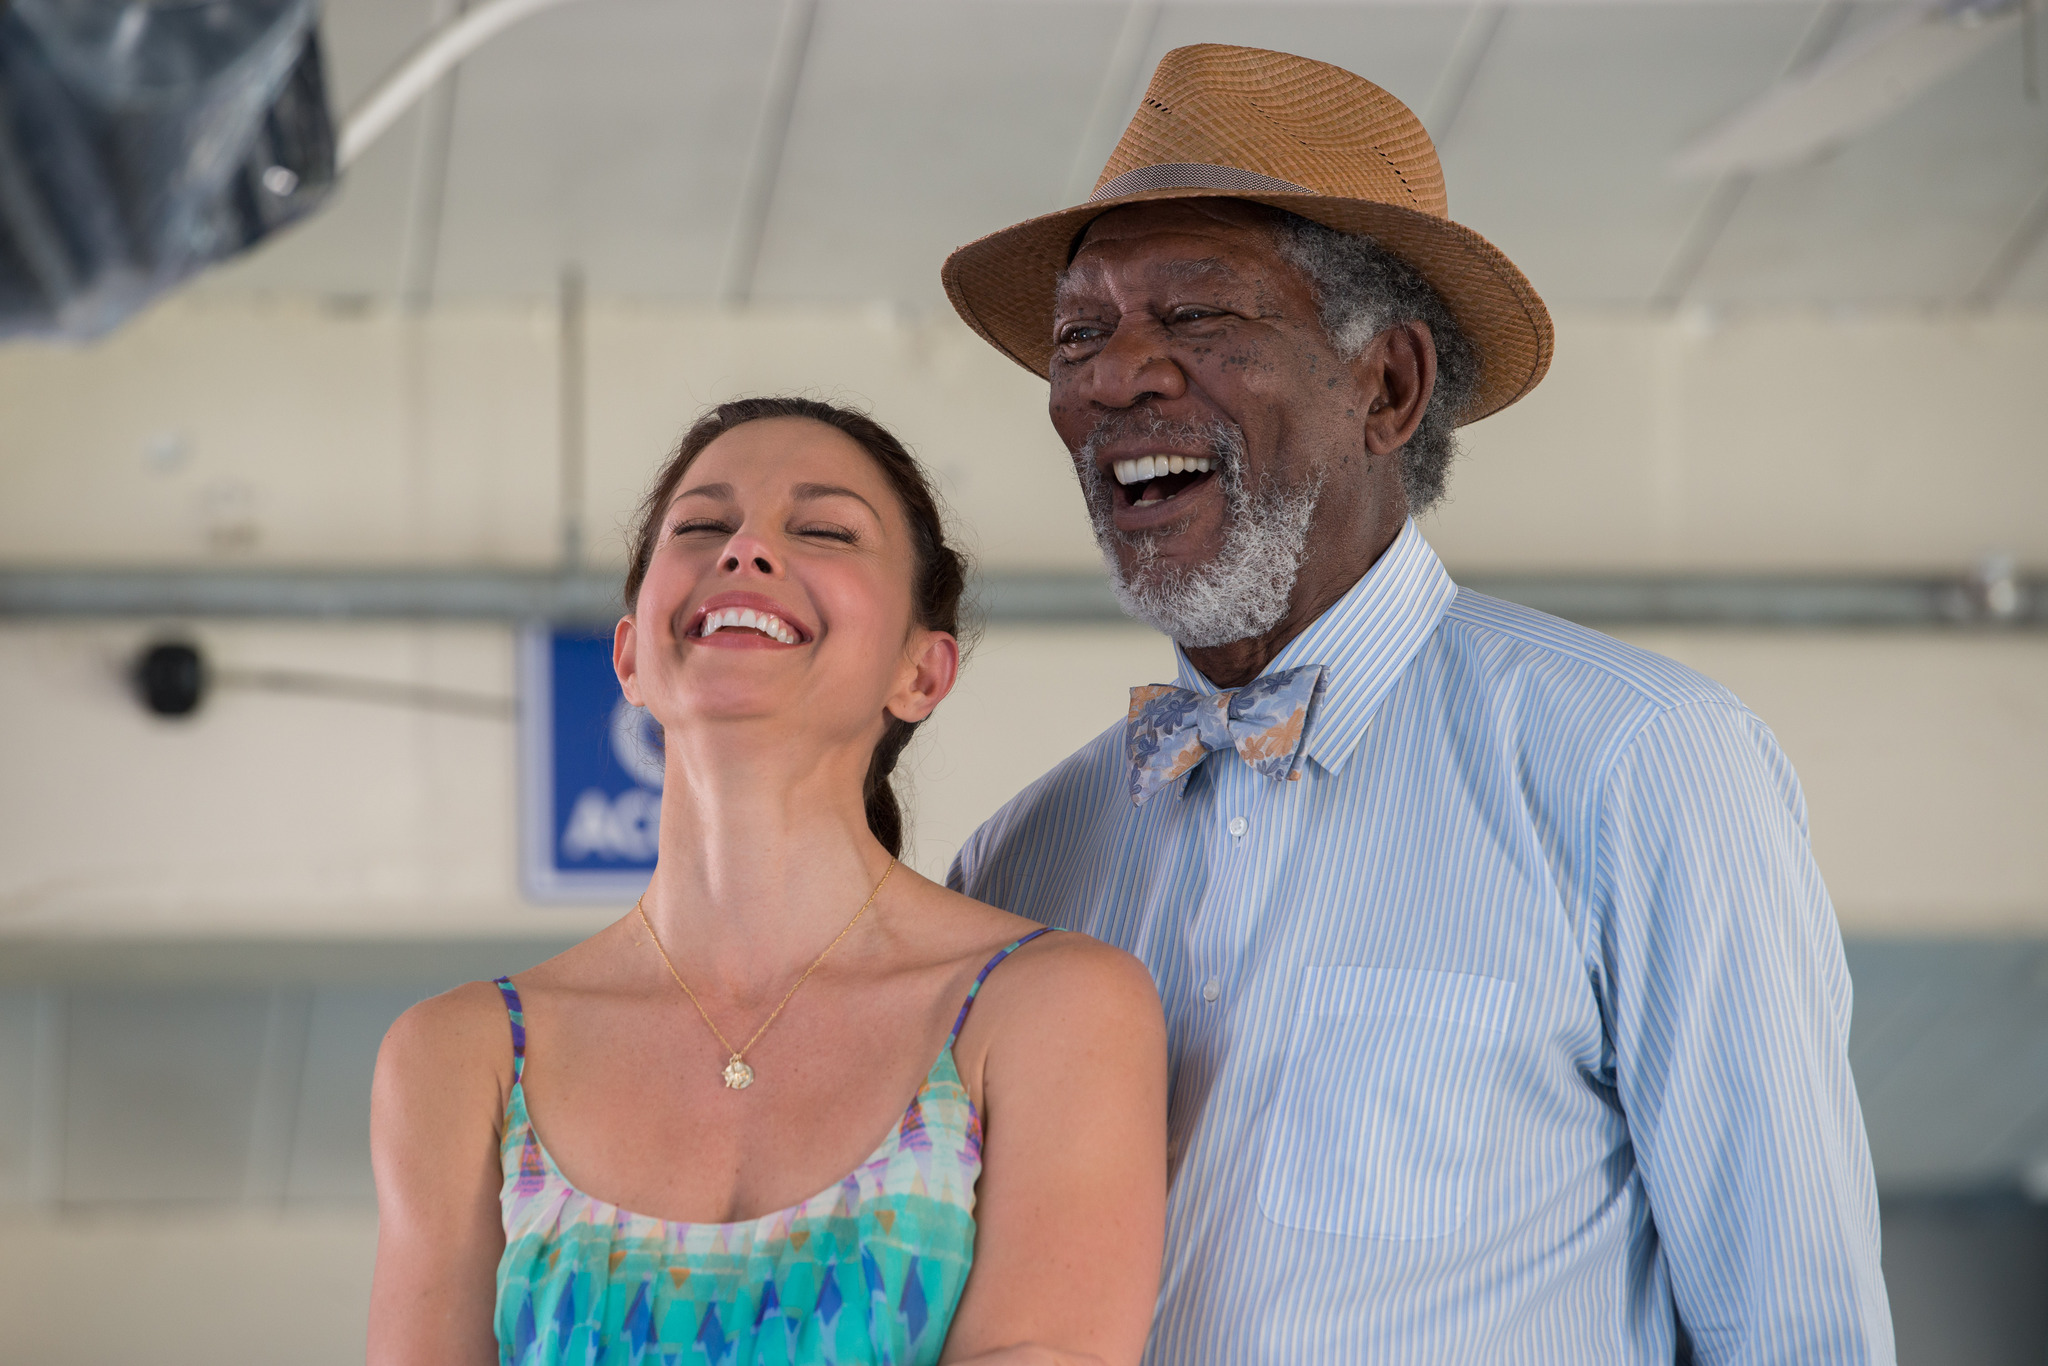 Still of Morgan Freeman and Ashley Judd in Dolphin Tale 2 (2014)